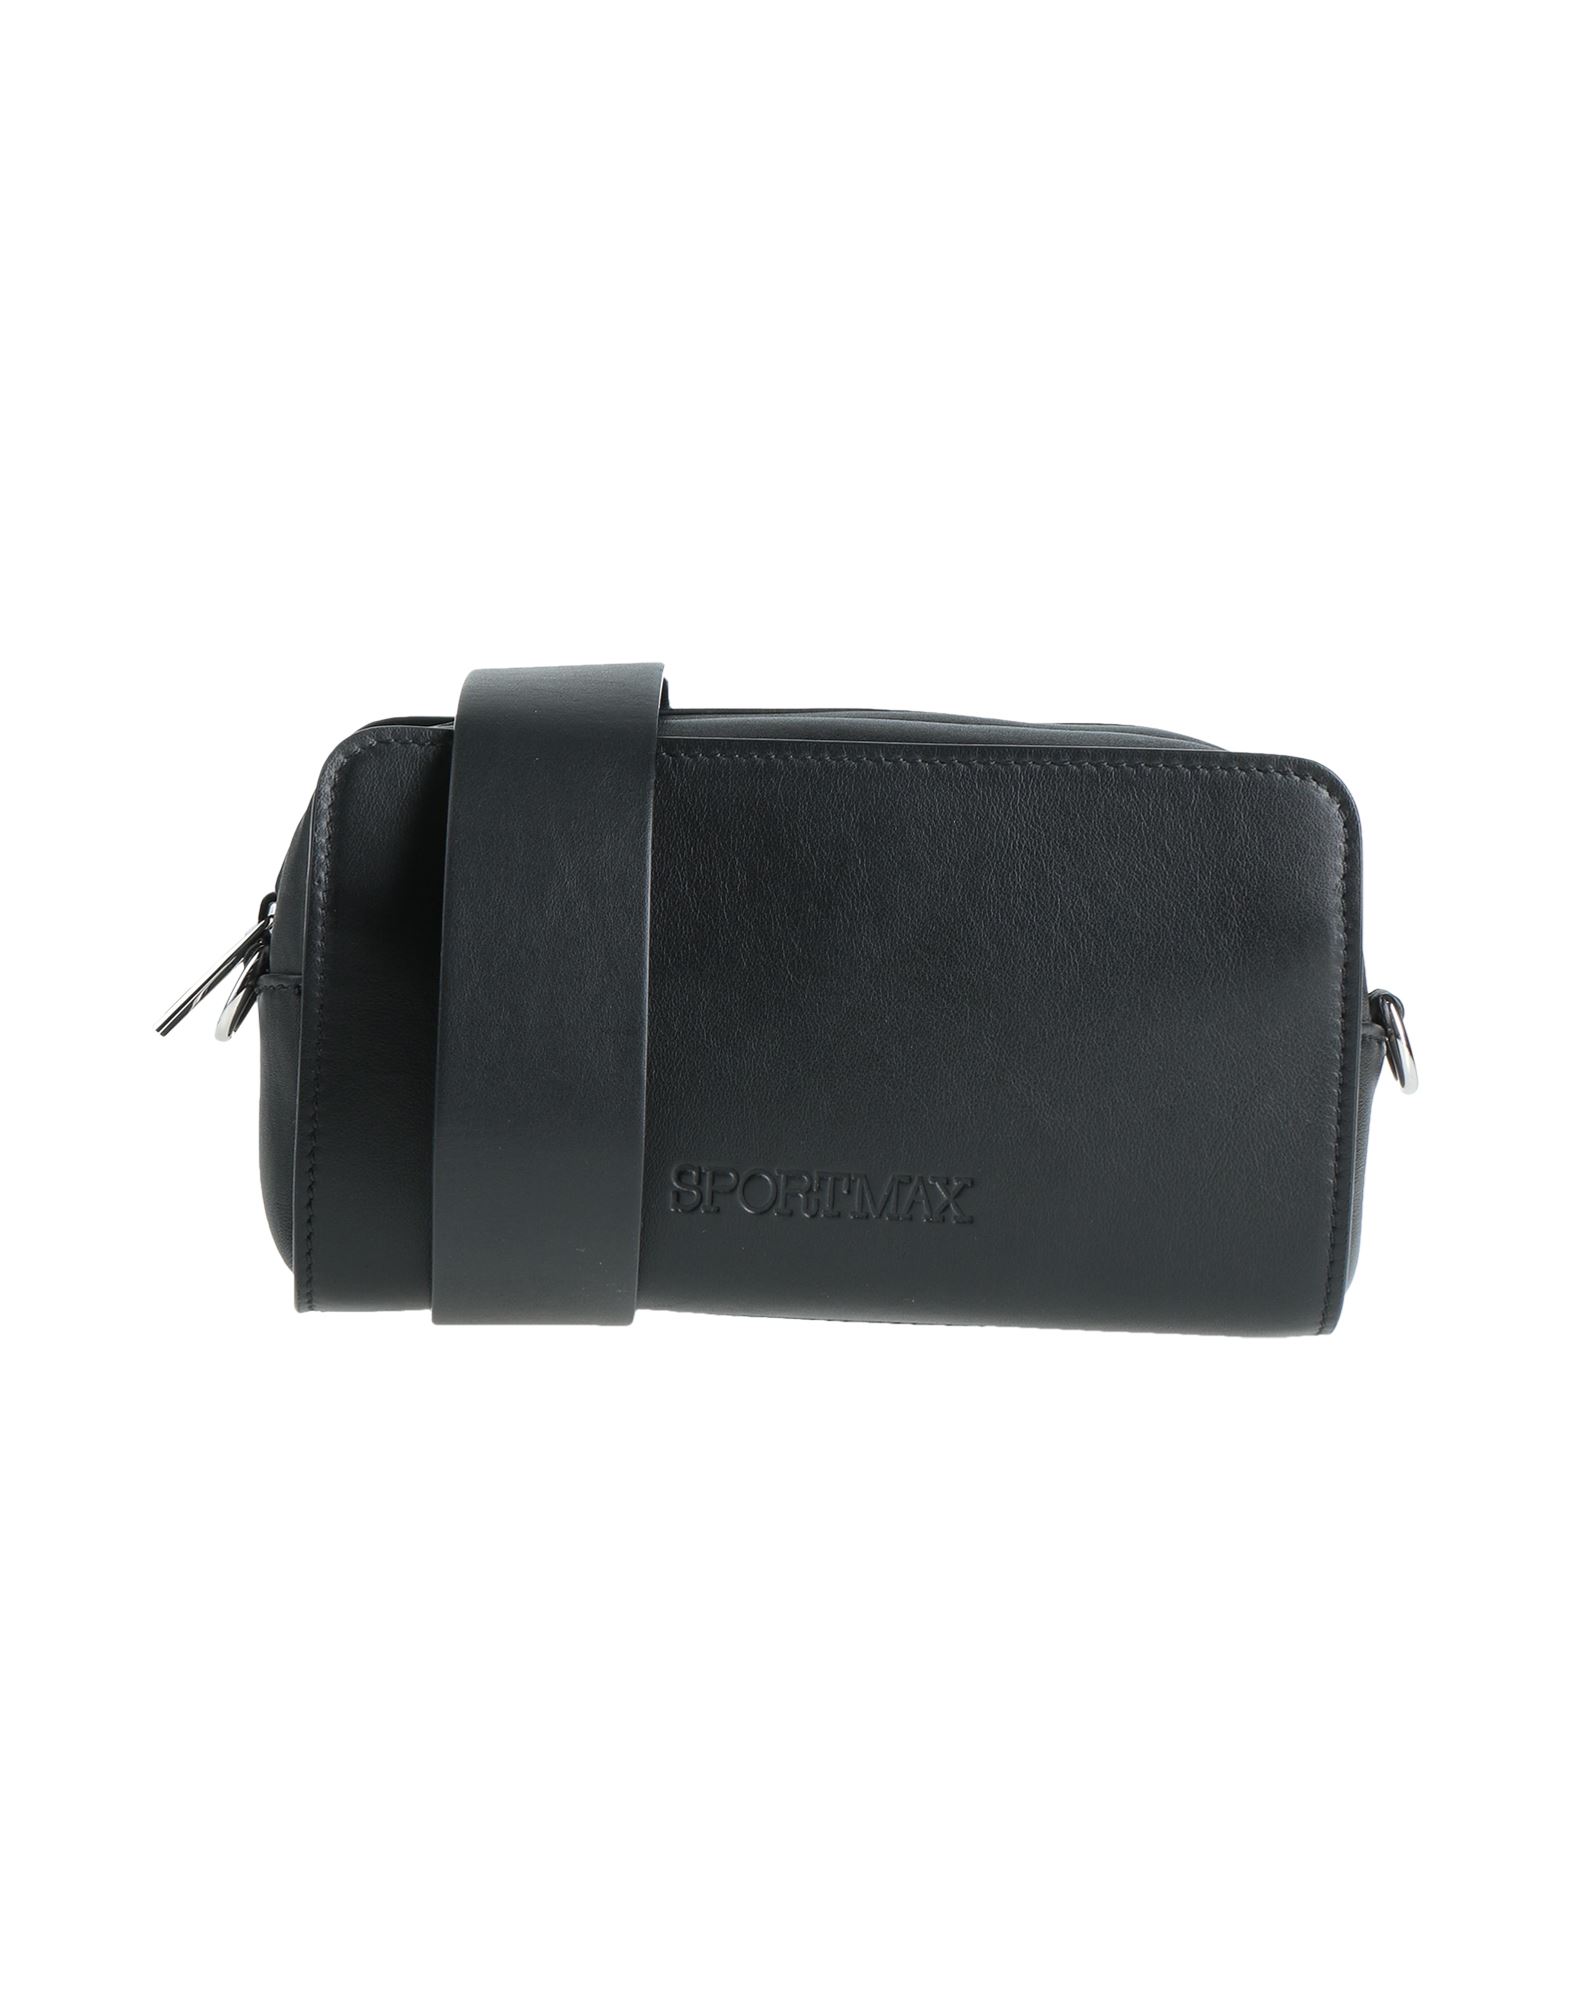 Sportmax Handbags In Black